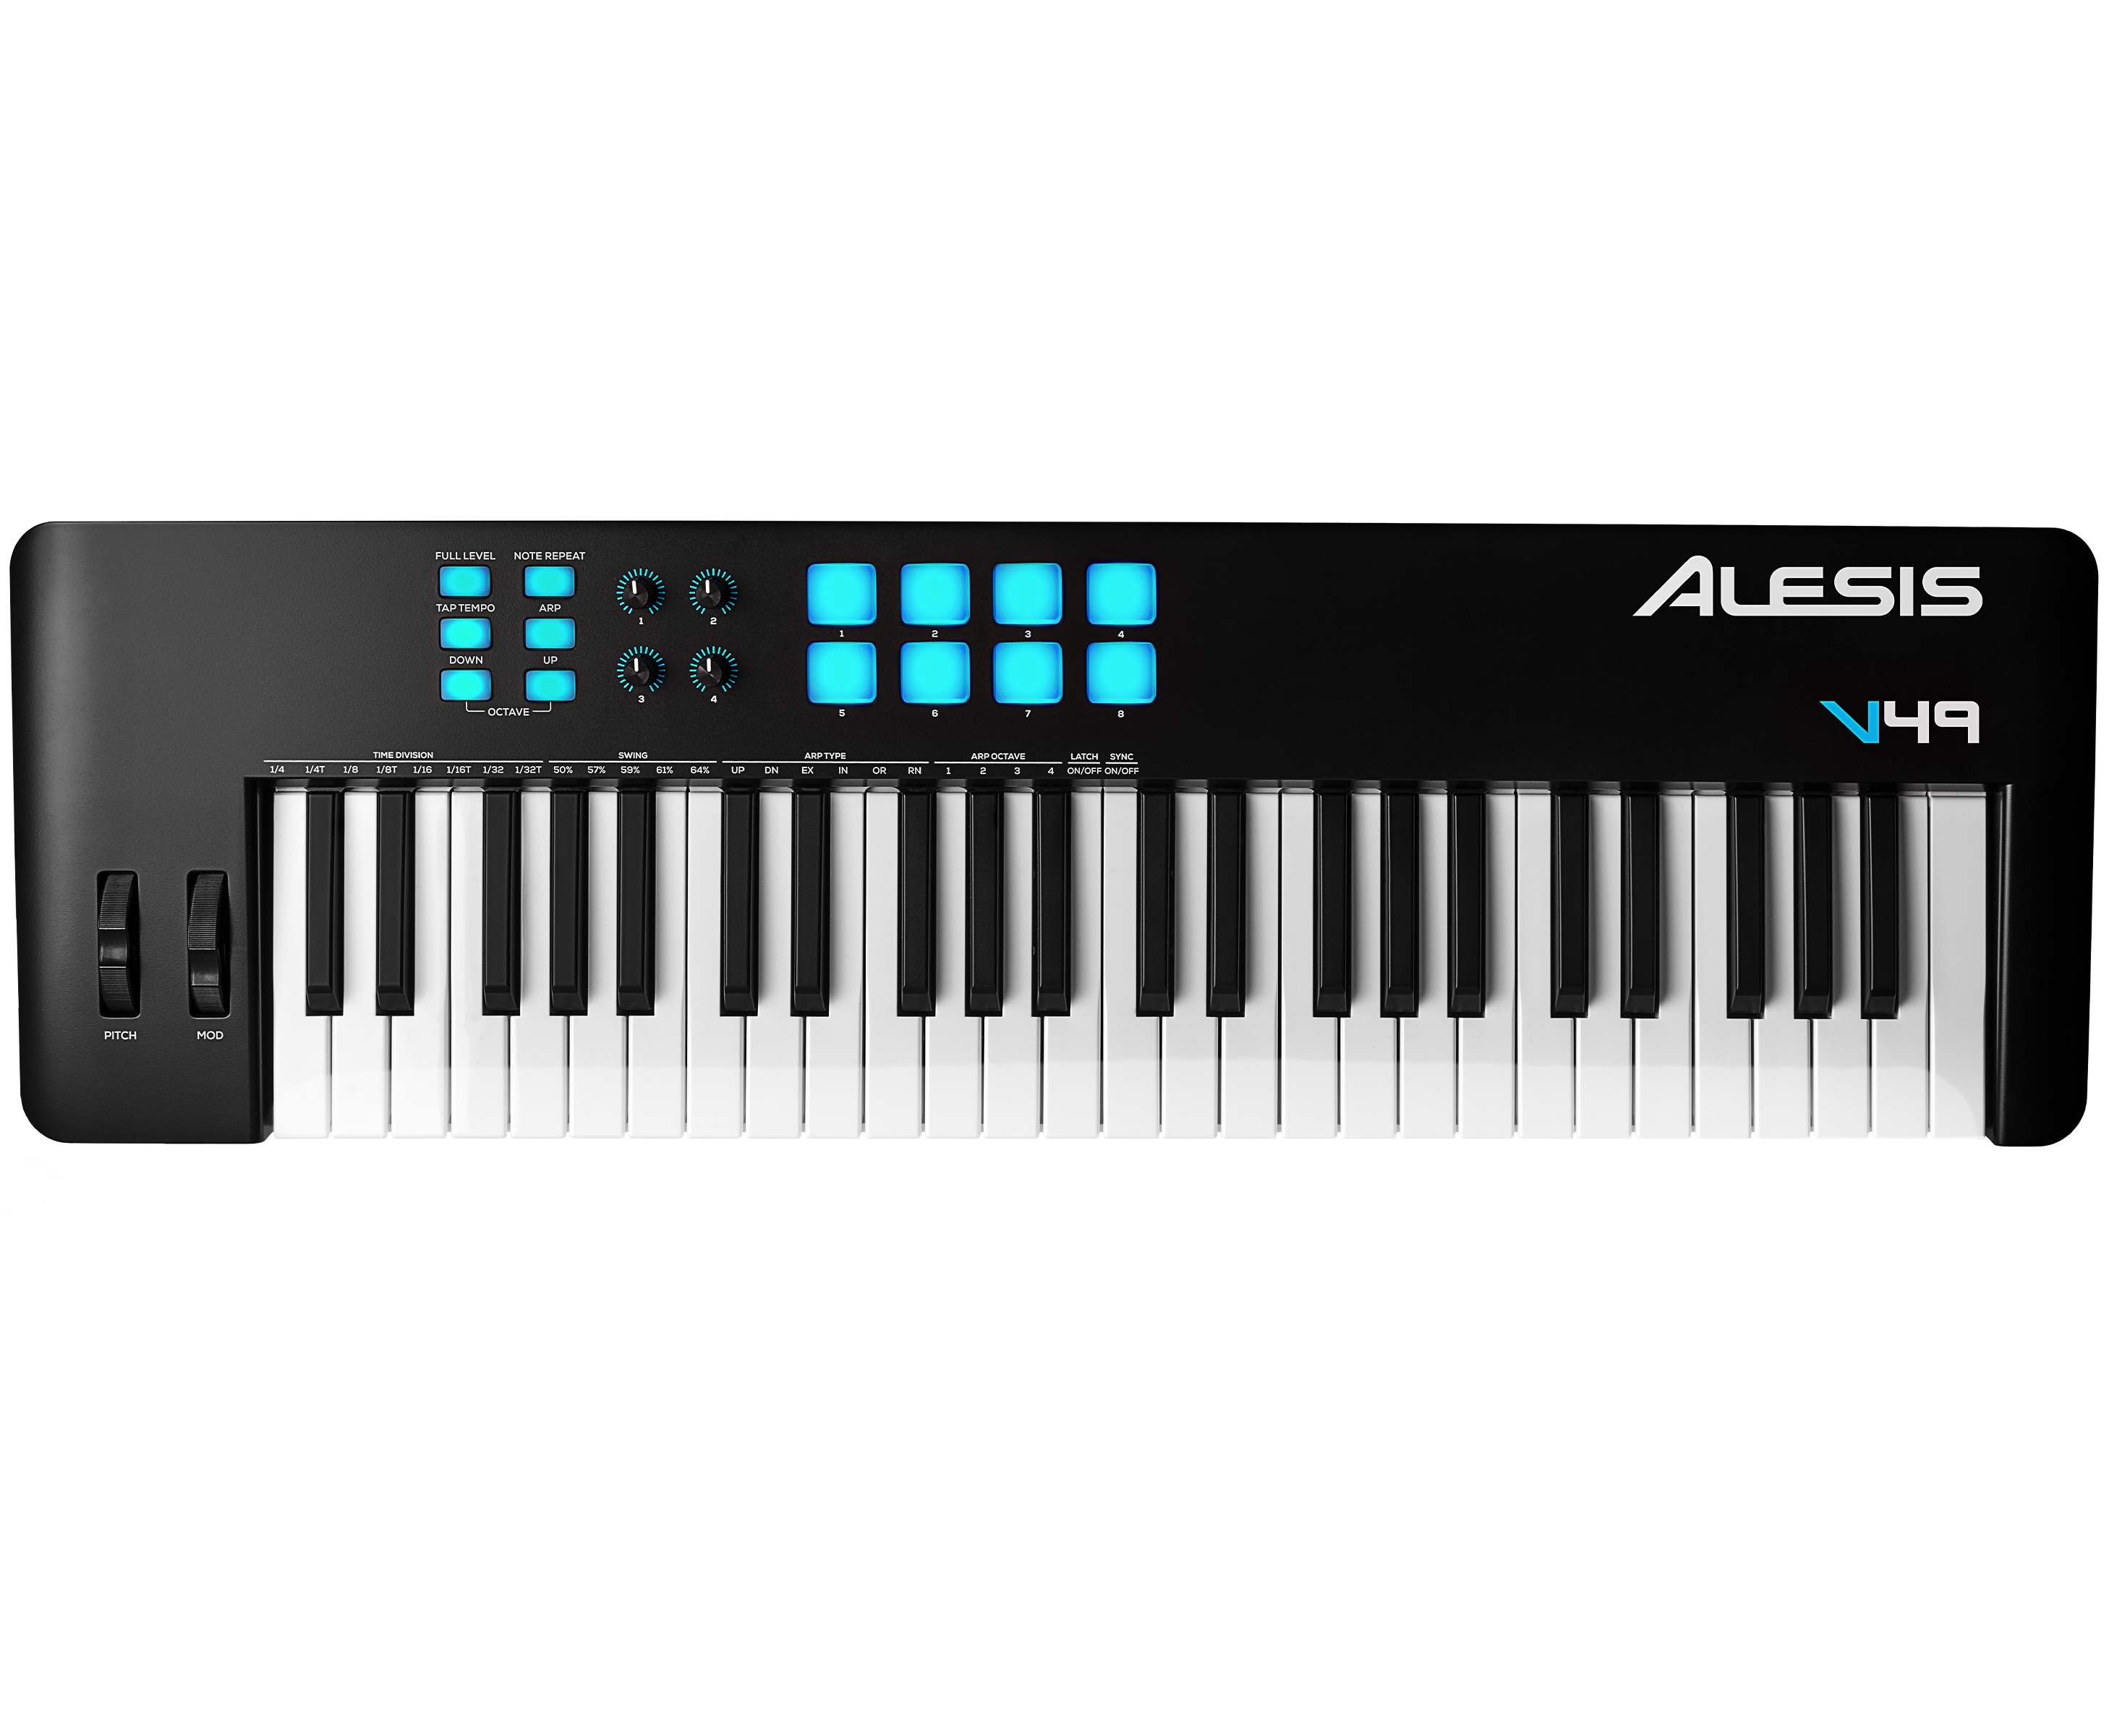 Køb Alesis v49 MKII MIDI keyboard - Pris 899.00 kr.